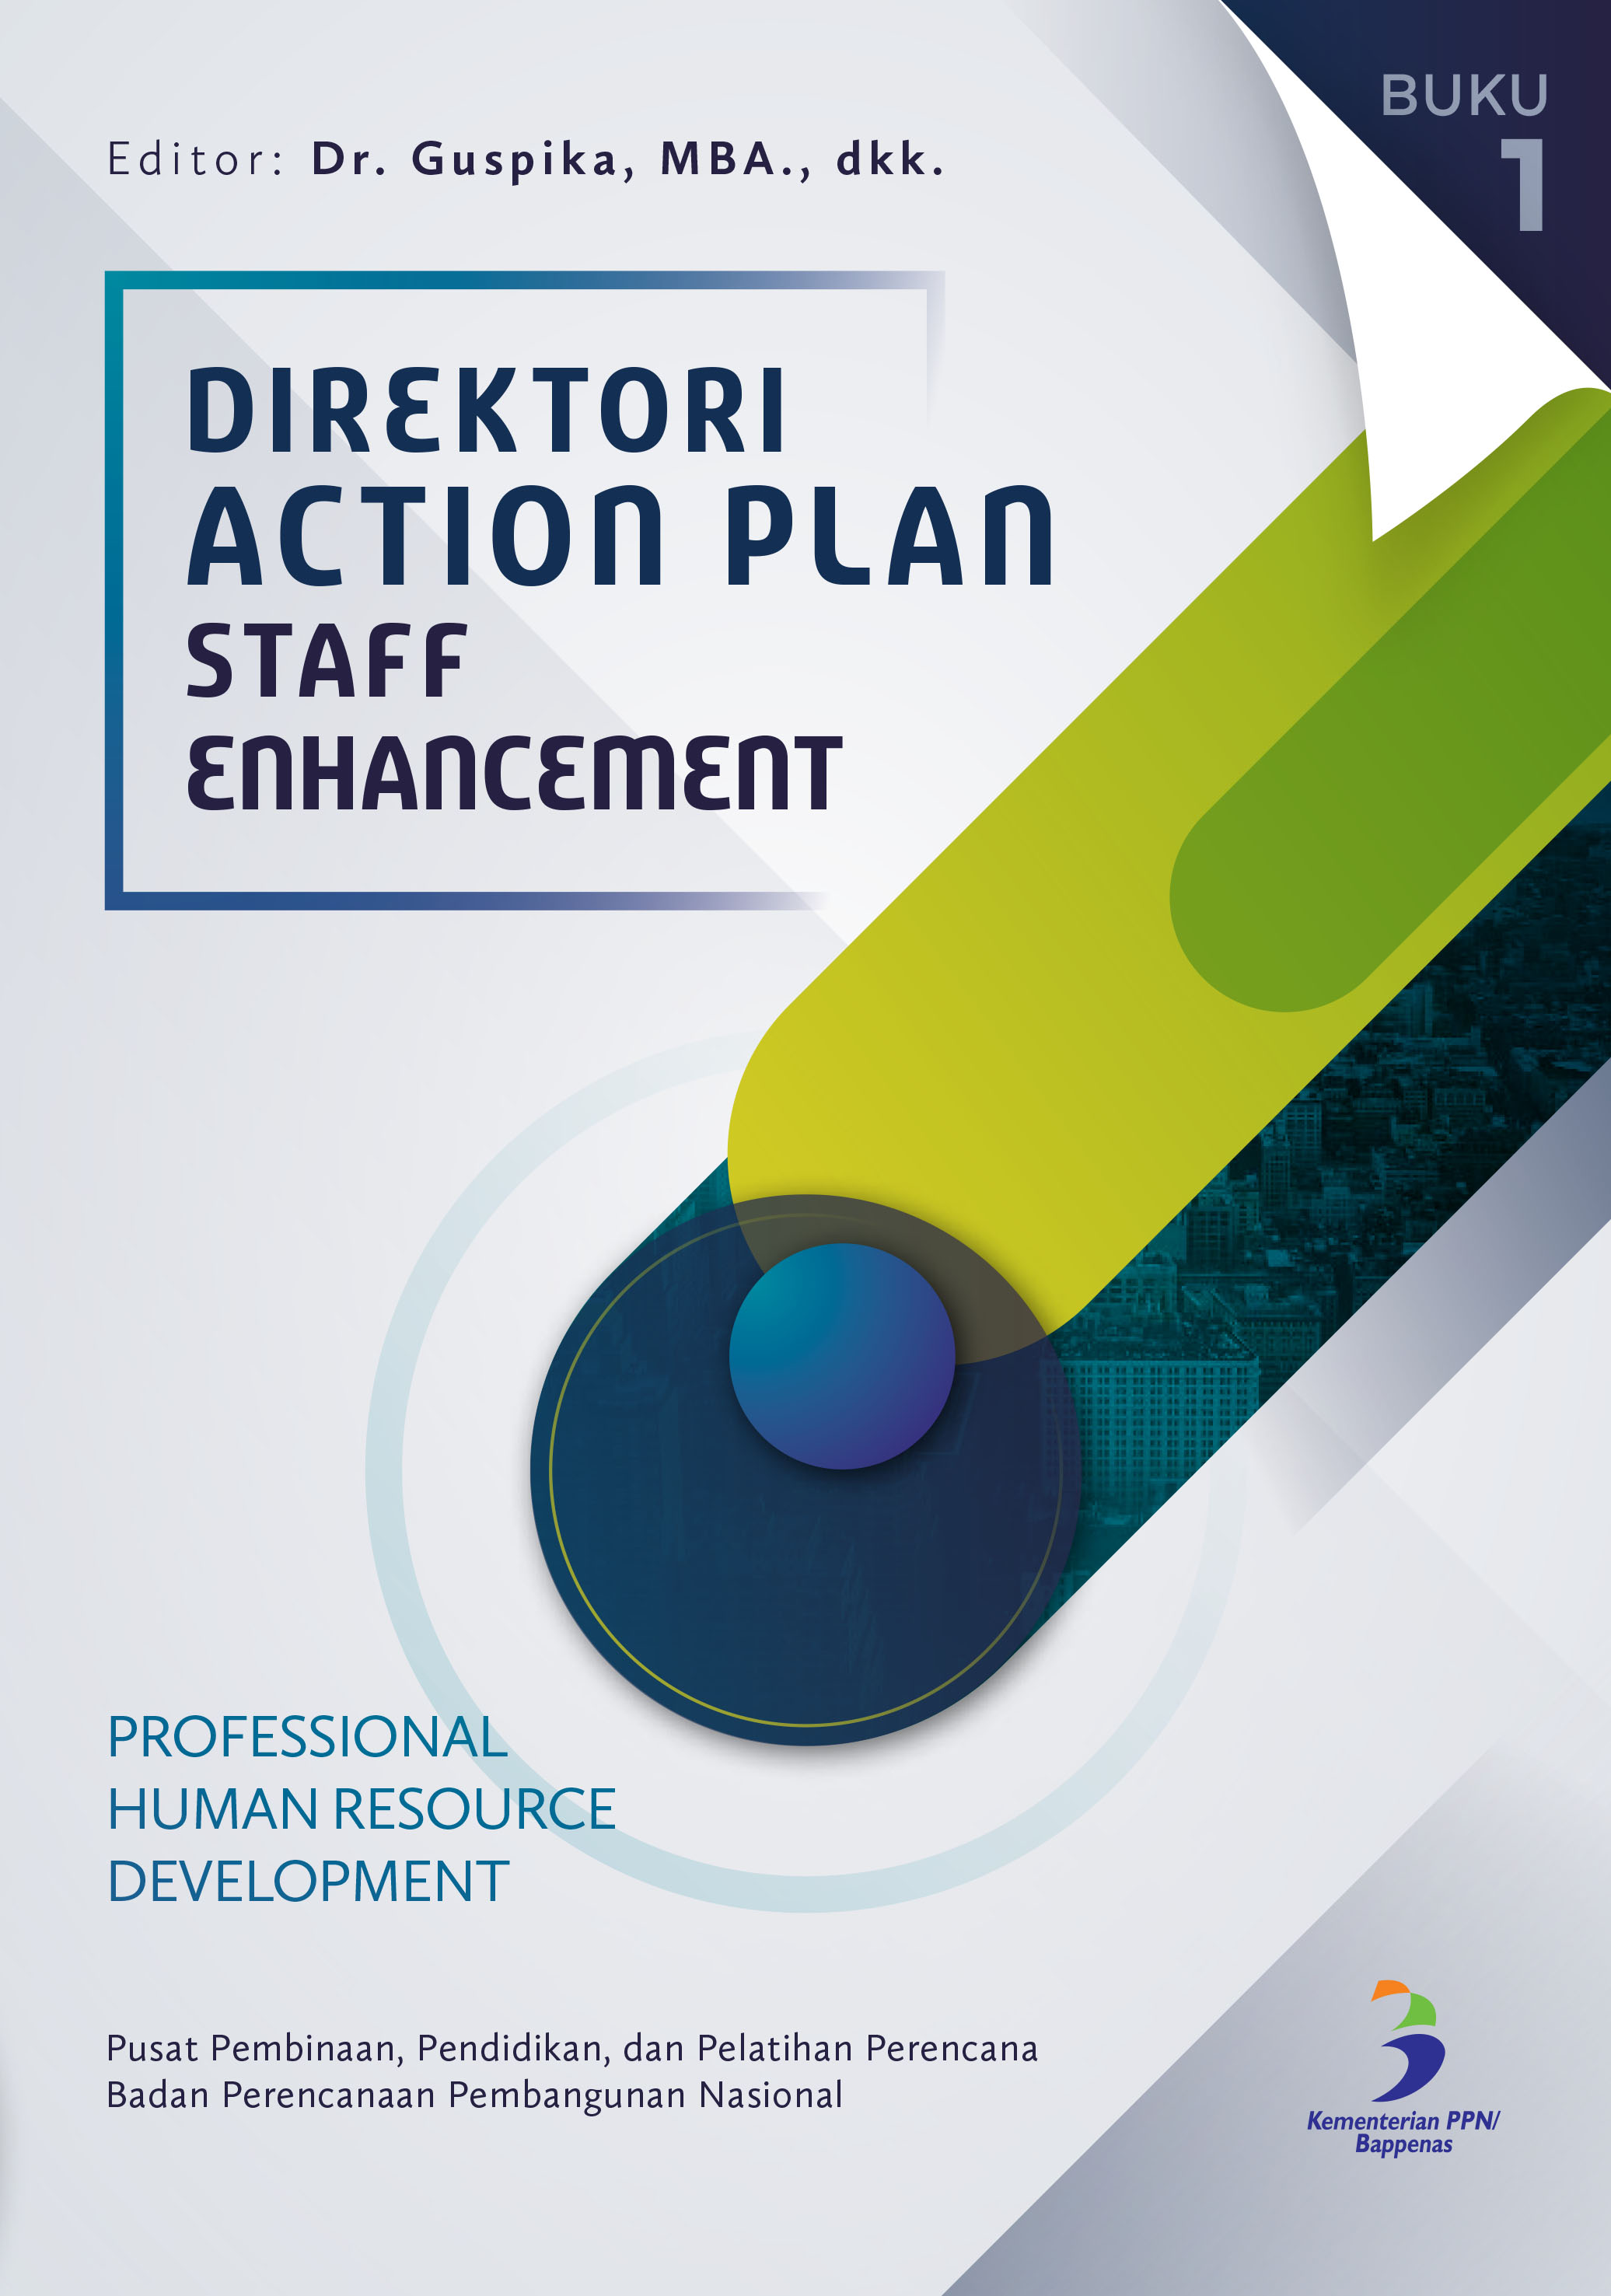 Buku 1 - Direktori Action Plan Pelatihan